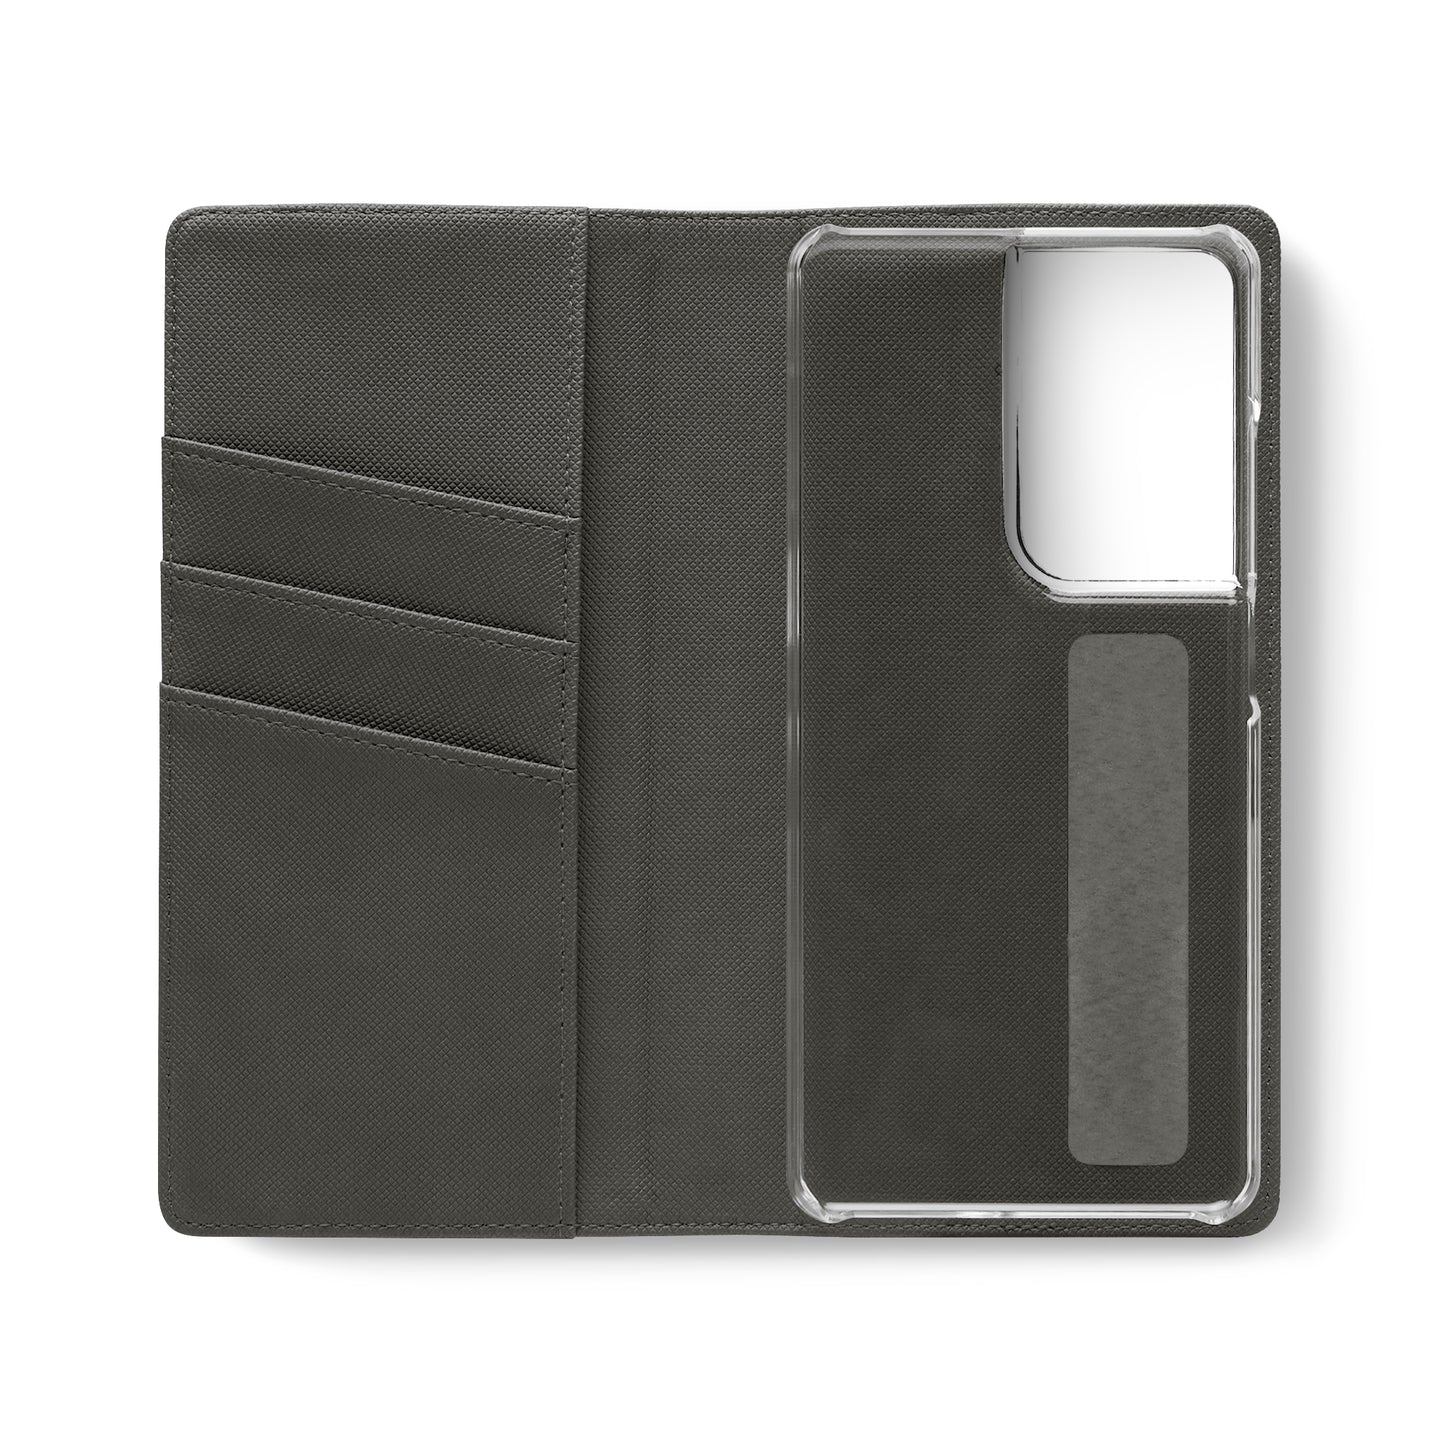 Phone Flip Cases - Equestrian Flip phone case - Horse design phone case - Stamina - Ghost Wallet phone case